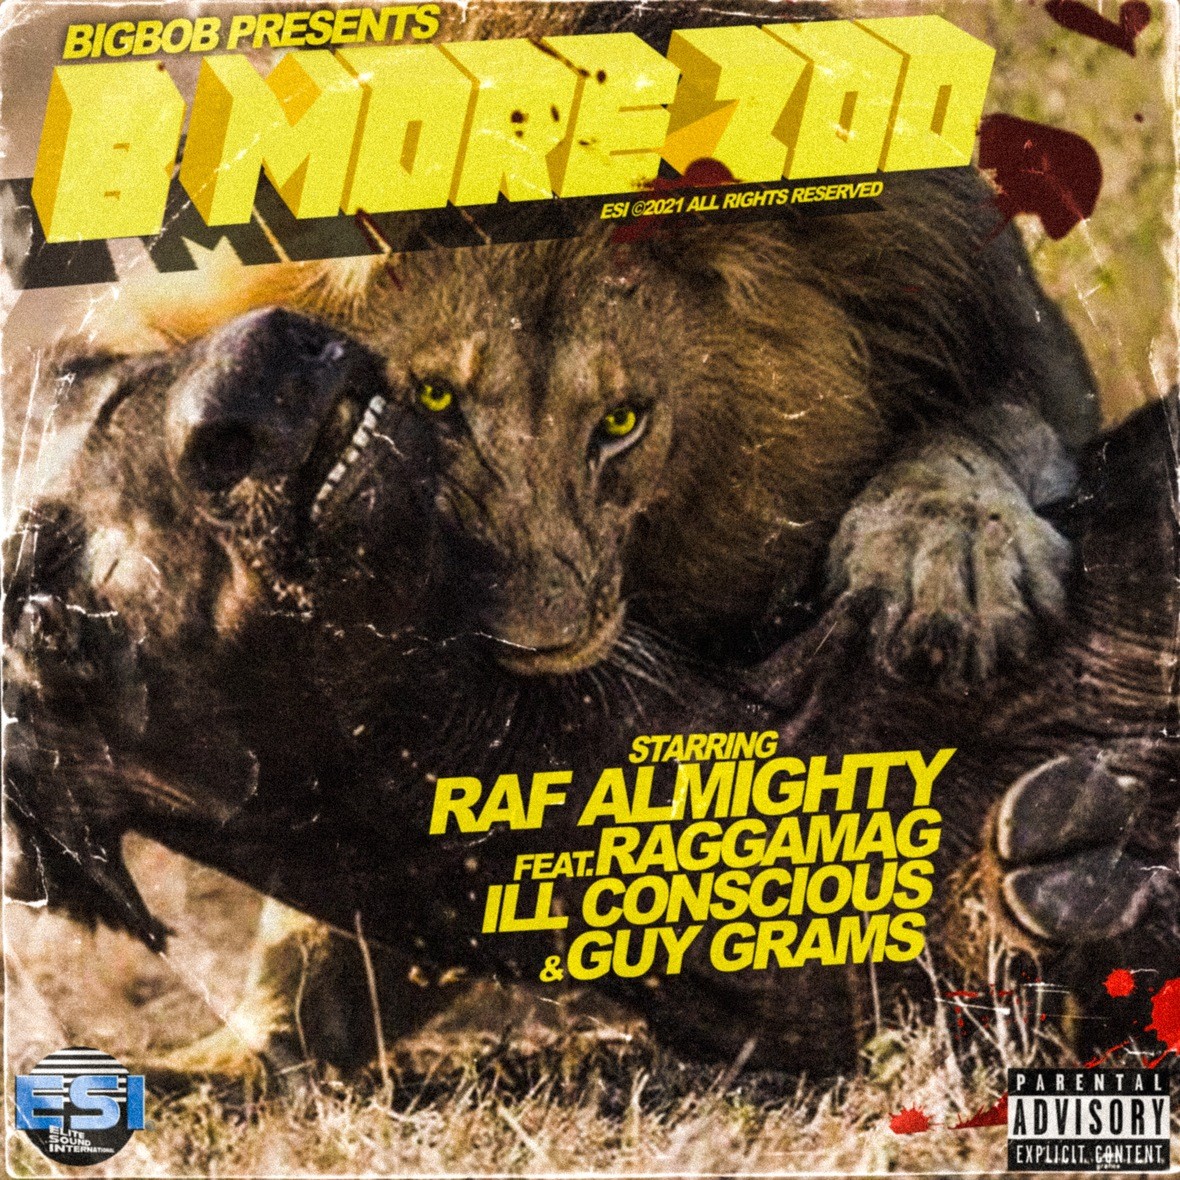 MP3: Big Almighty (Raf Almighty & BigBob) feat. Raggamag, Ill Conscious, & Guy Grams - B More Zoo